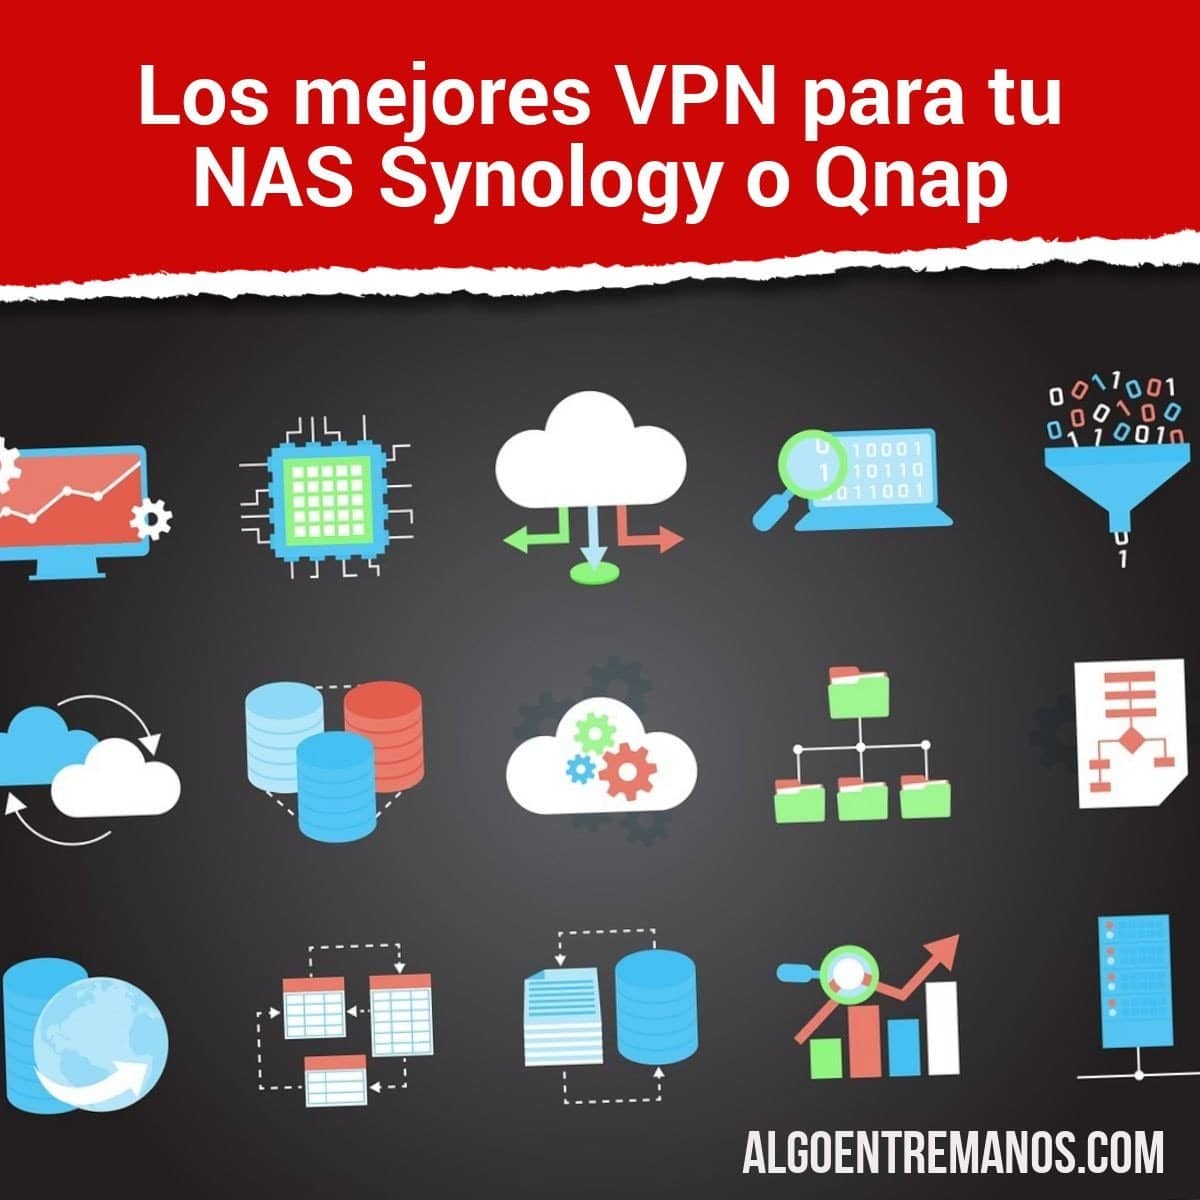 Los mejores VPN para tu NAS Synology o Qnap